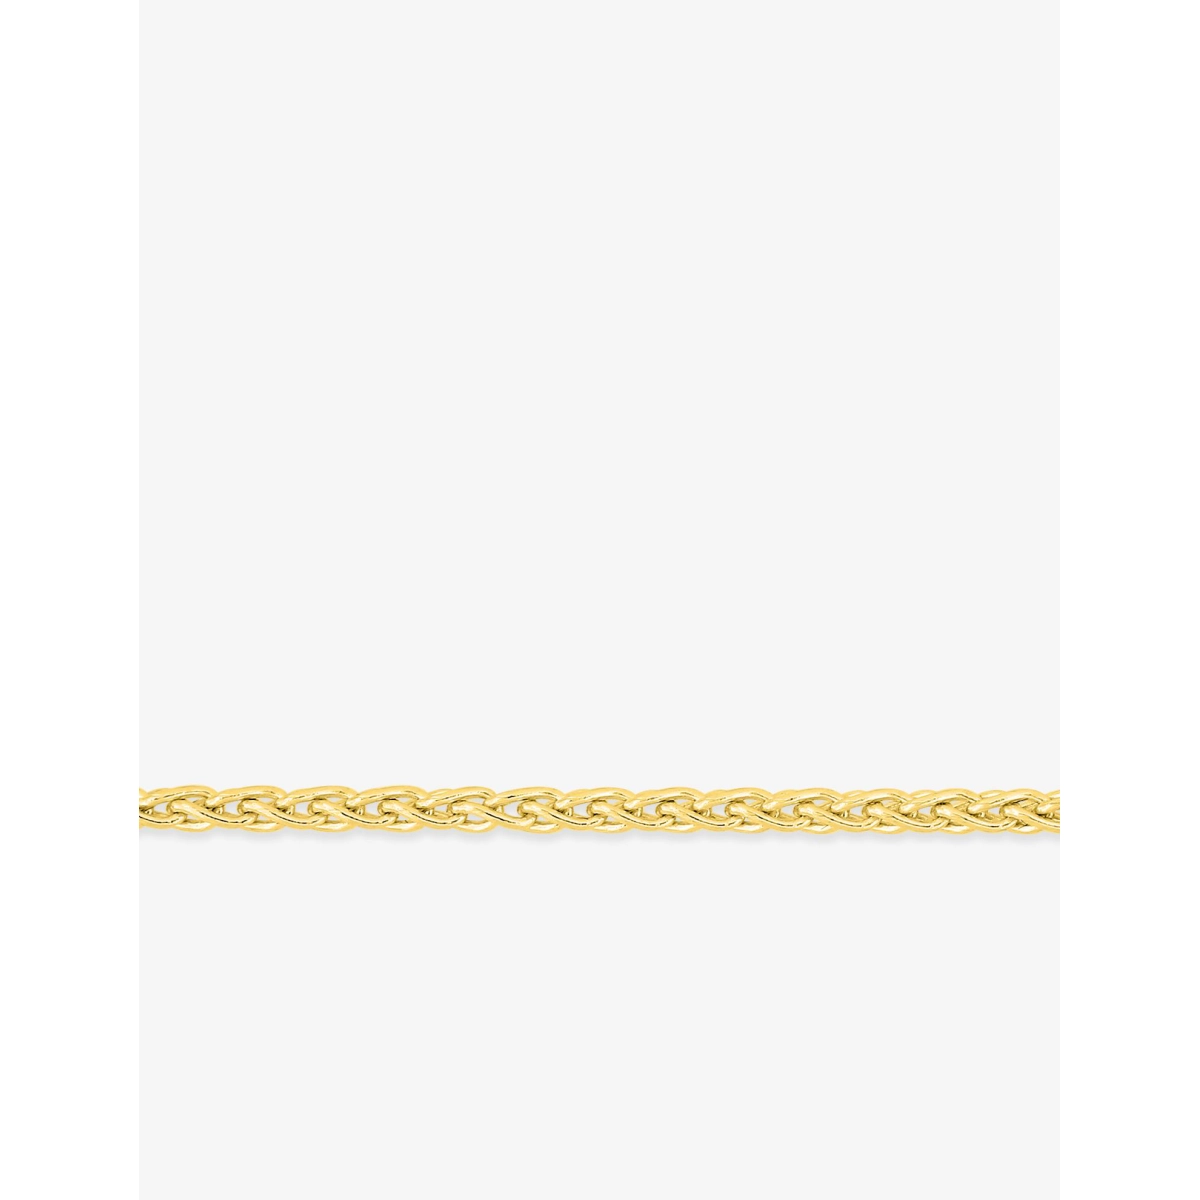 Bracelet 'spiga chain' 18K YG Lua Blanca  .US70 - Size 18